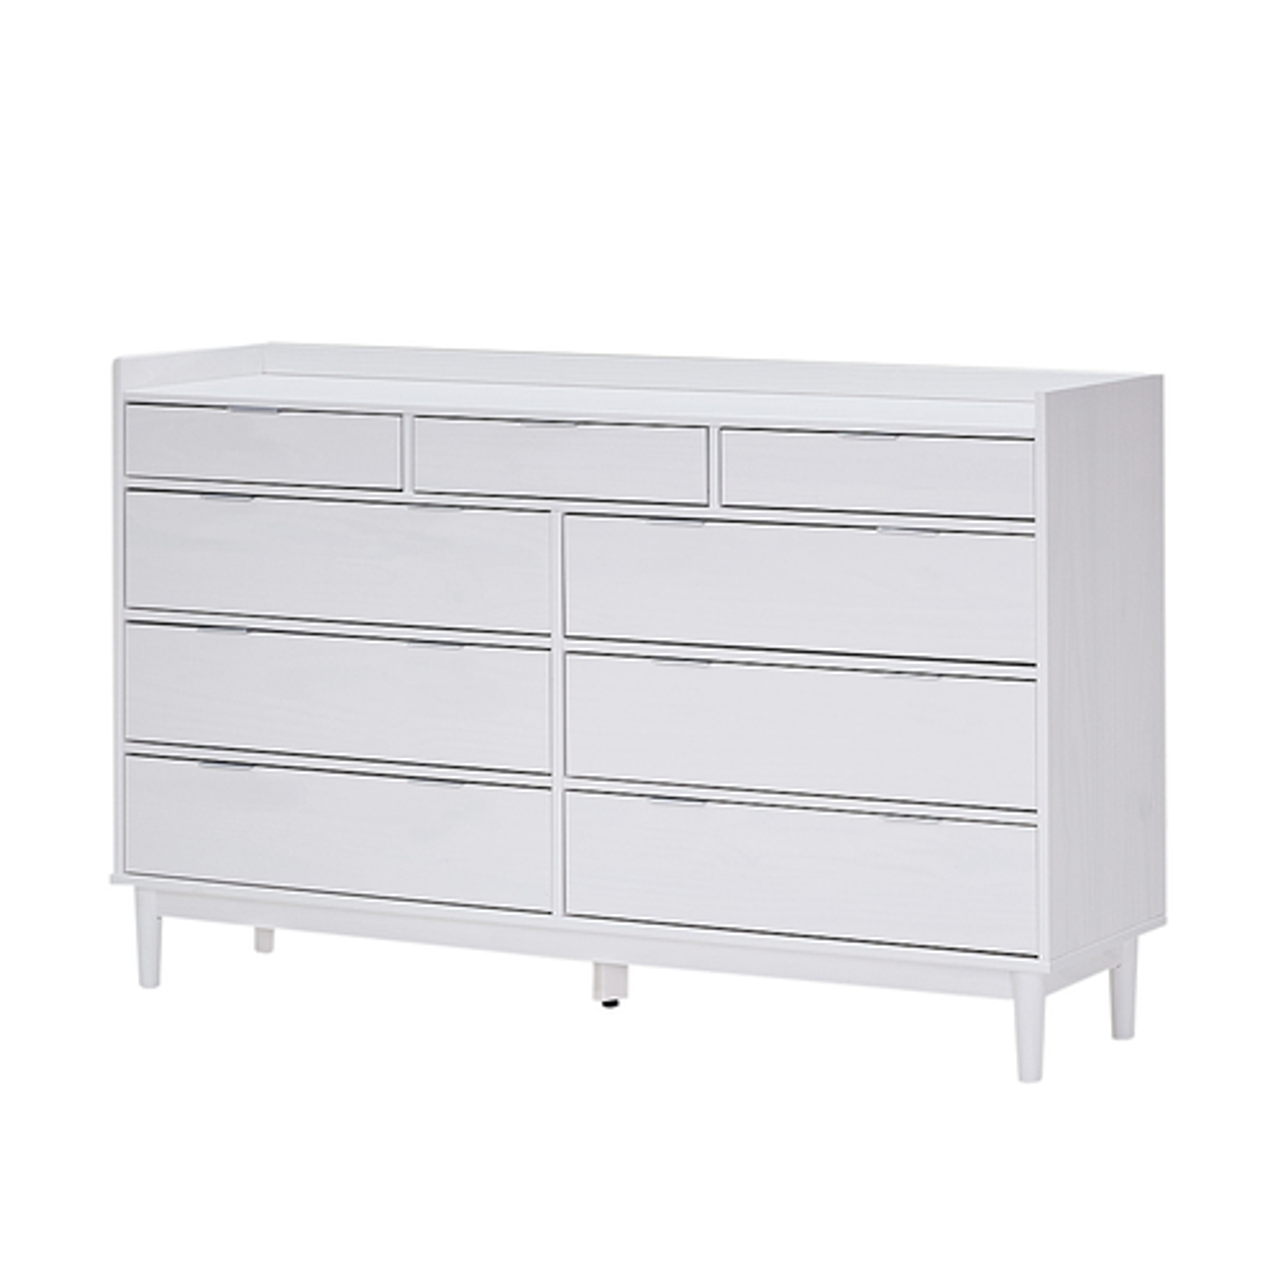 Walker Edison - Mid Century Modern Solid Wood Tray-Top 9-Drawer Dresser - White